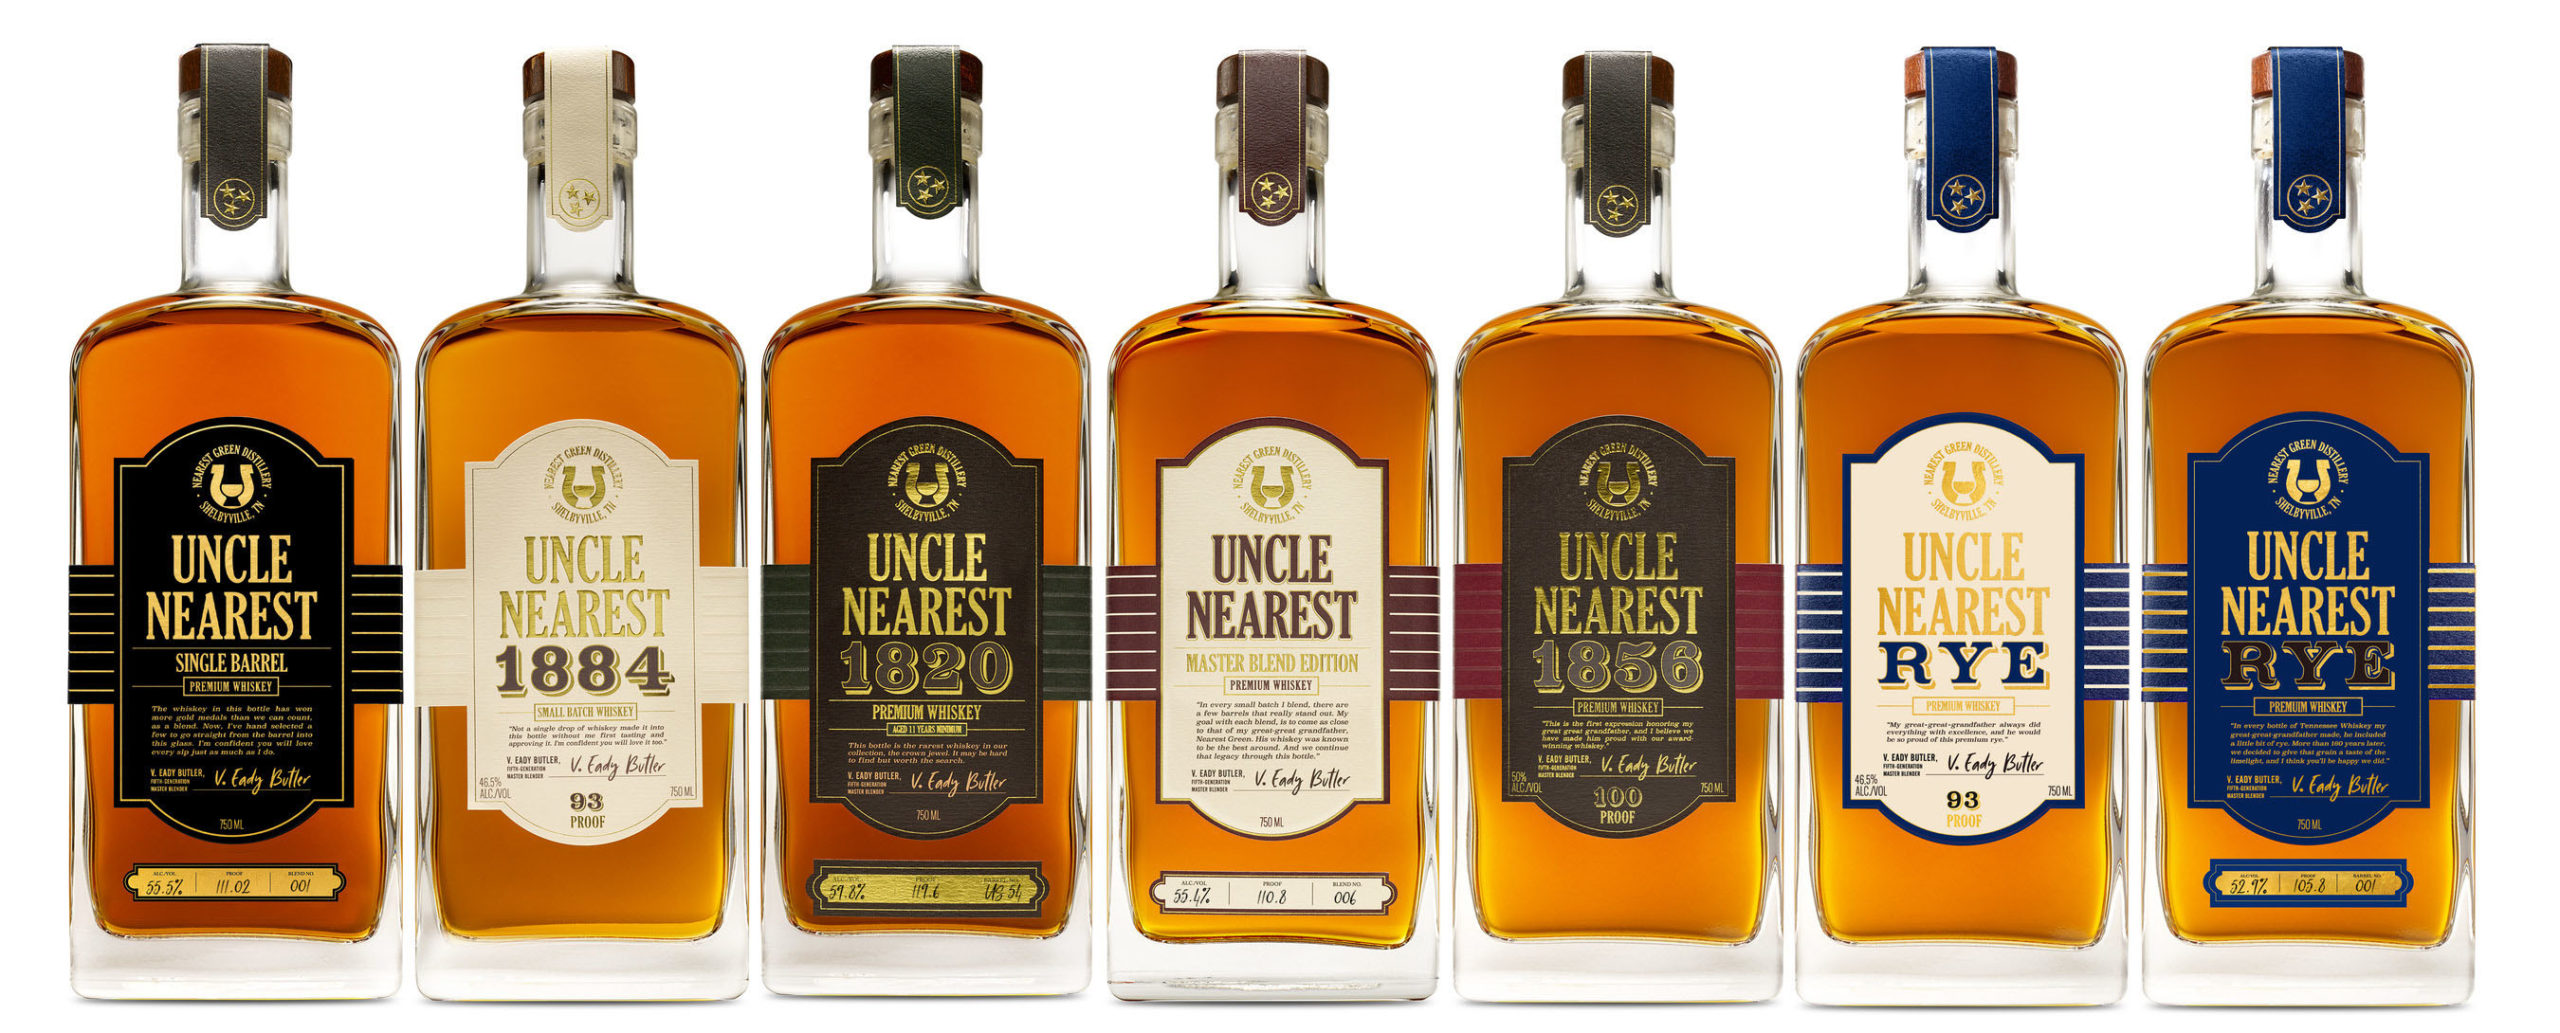 Uncle Nearest Premium Whiskey - Whiskey, Bourbon and Rye